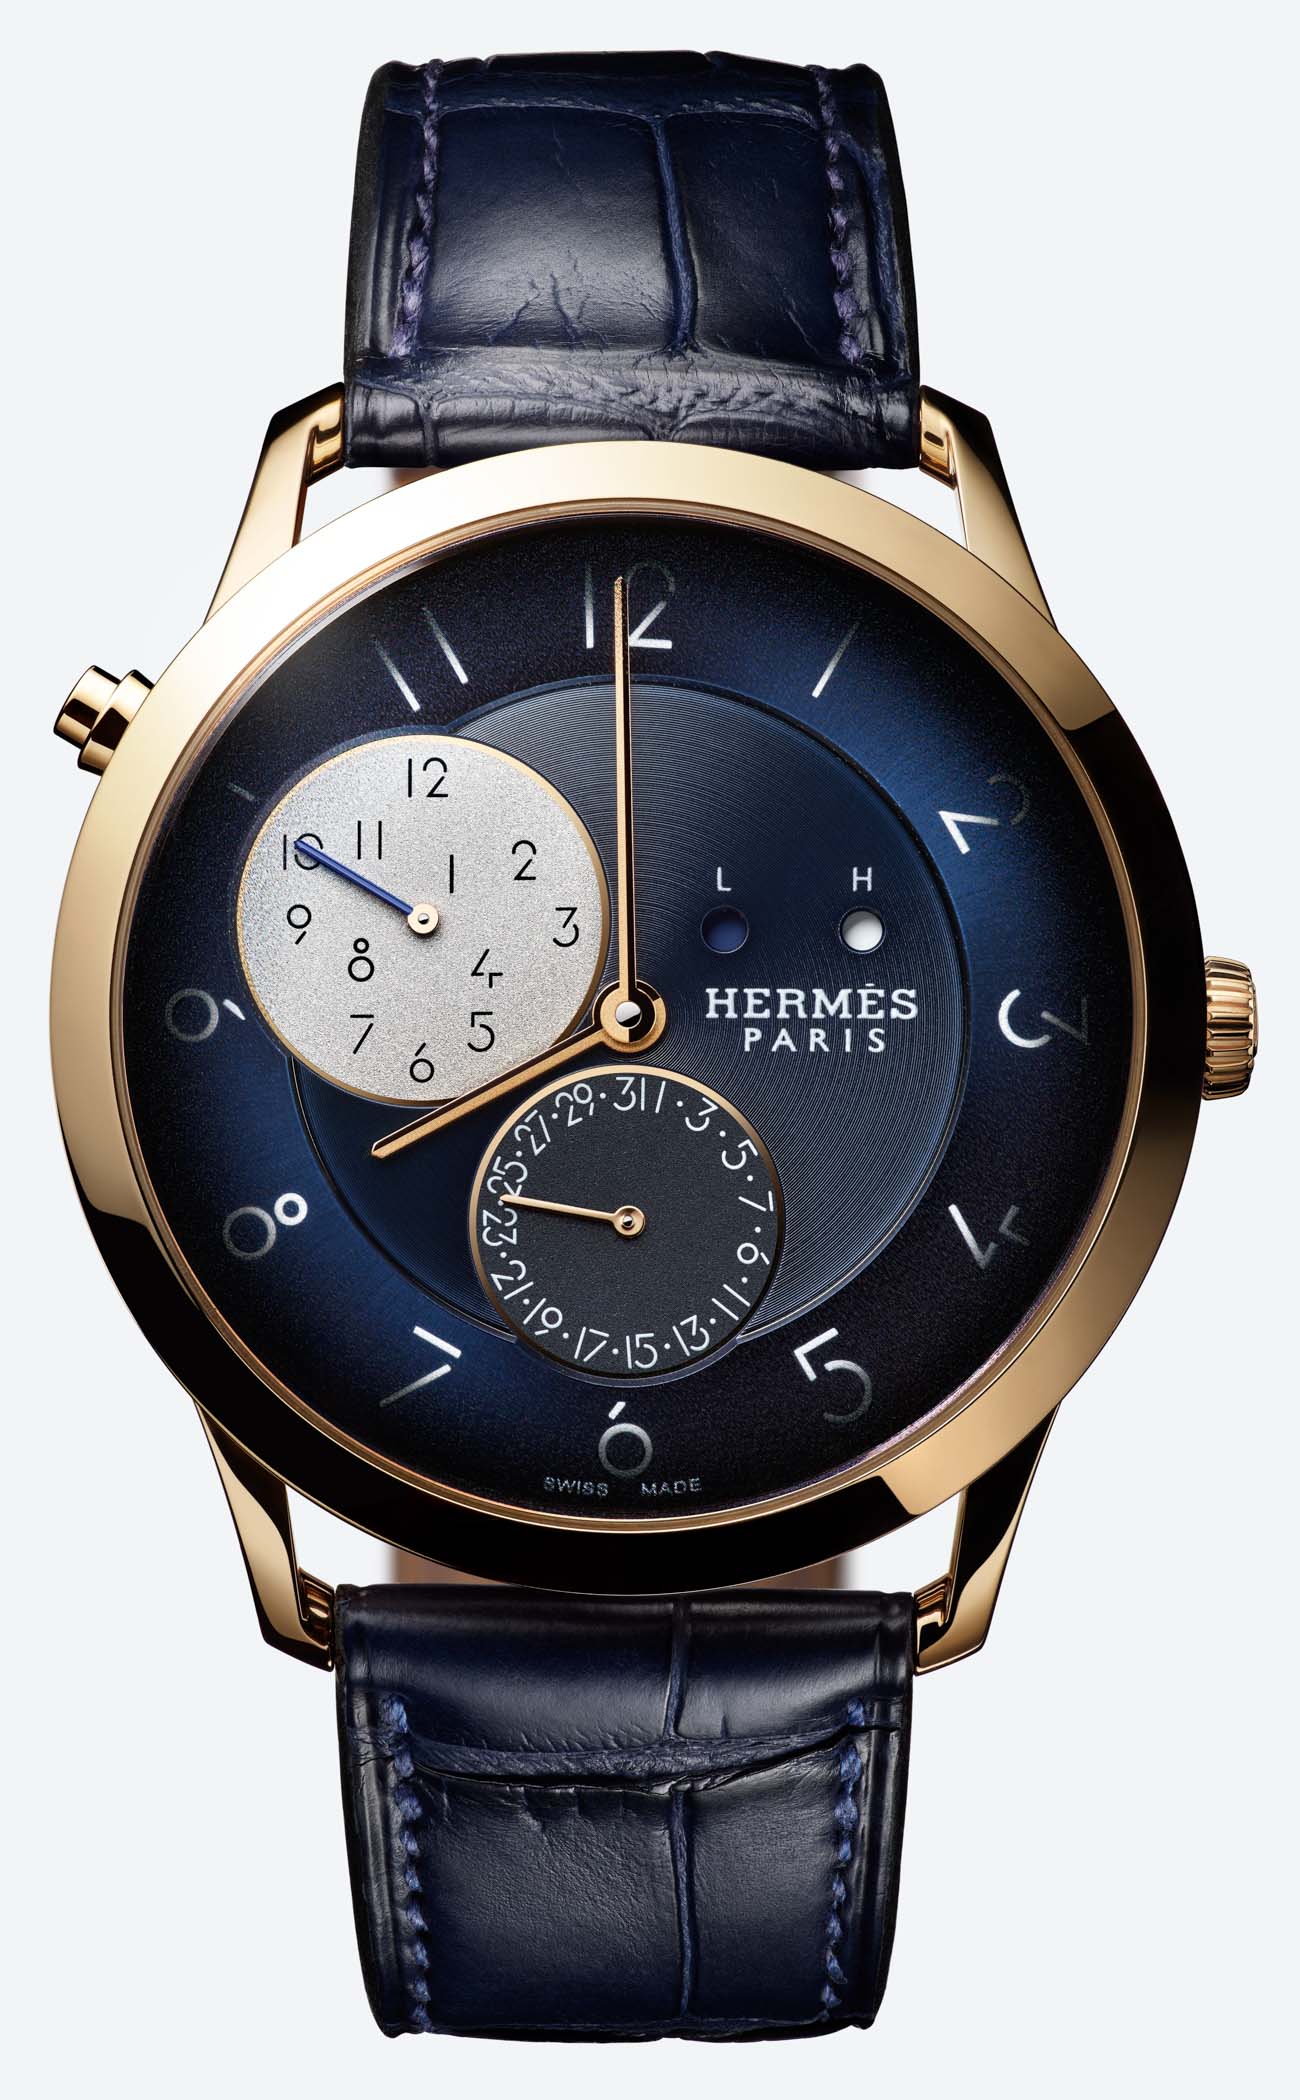 Hermès 'Slim d'Hermès' GMT Watch aBlogtoWatch